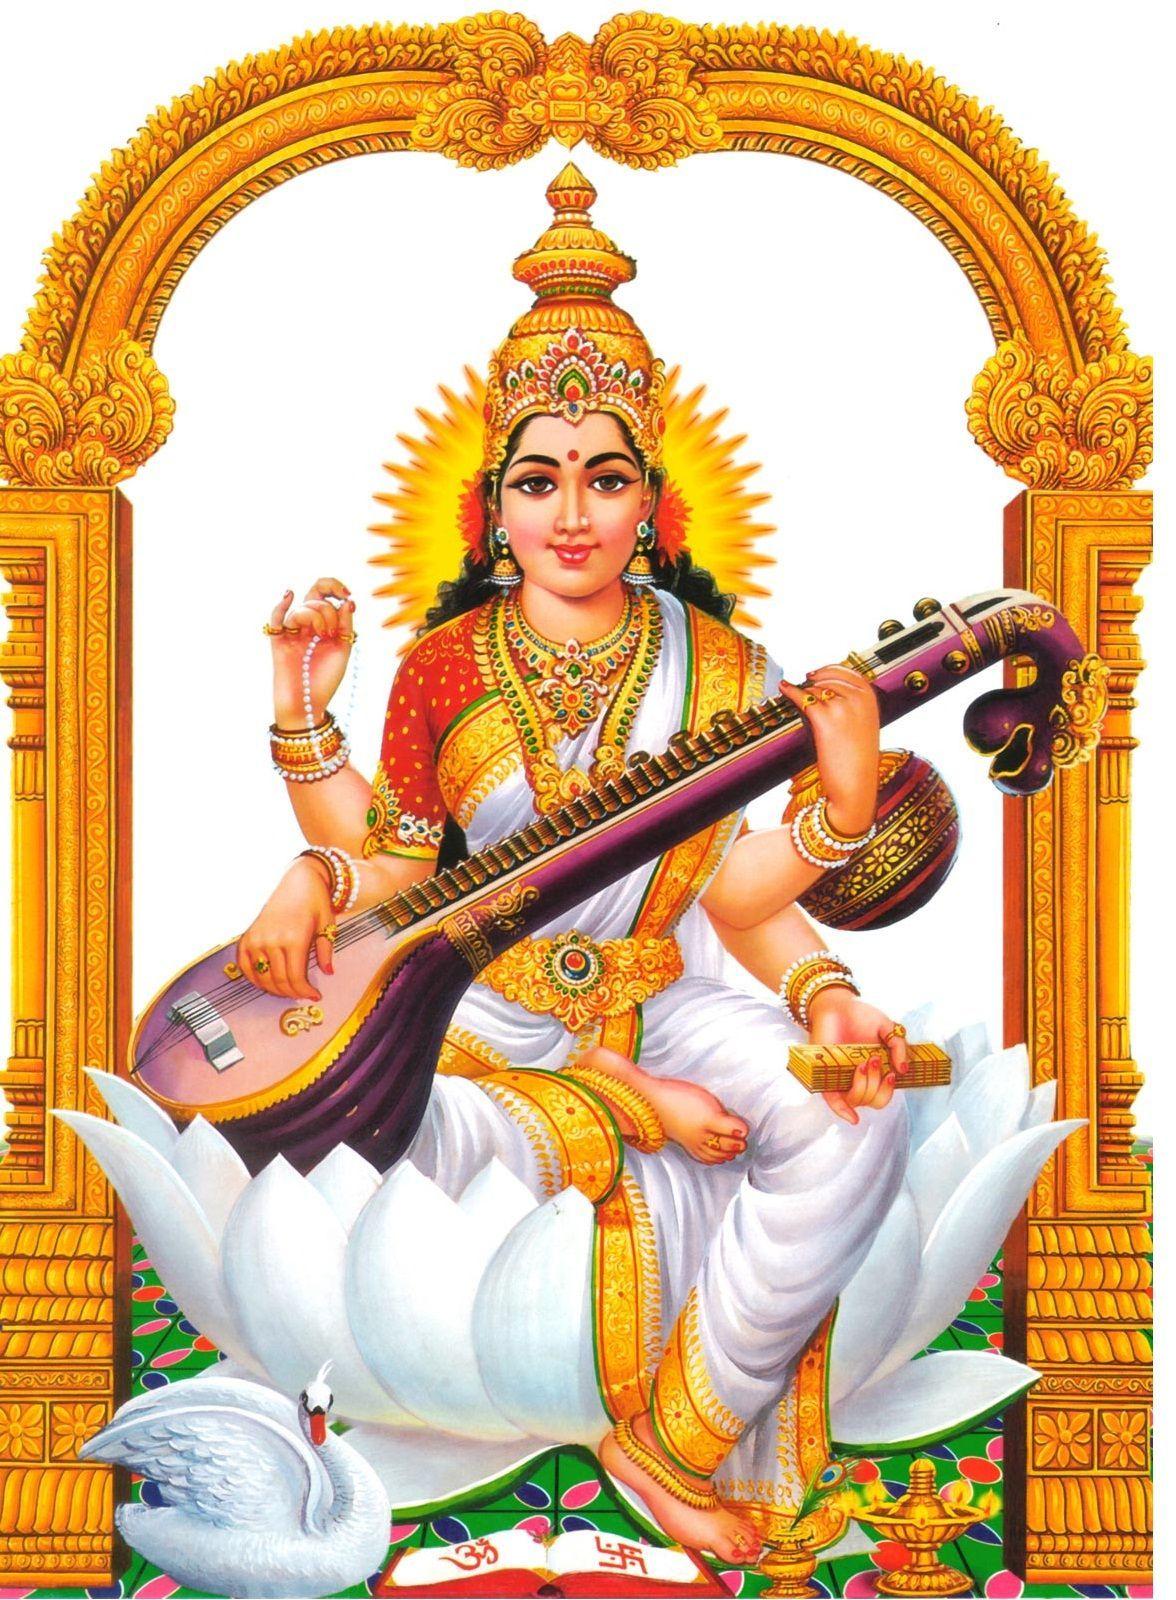 Saraswati devi 1321 Hindu God Wallpaper for Mobile Phones, God